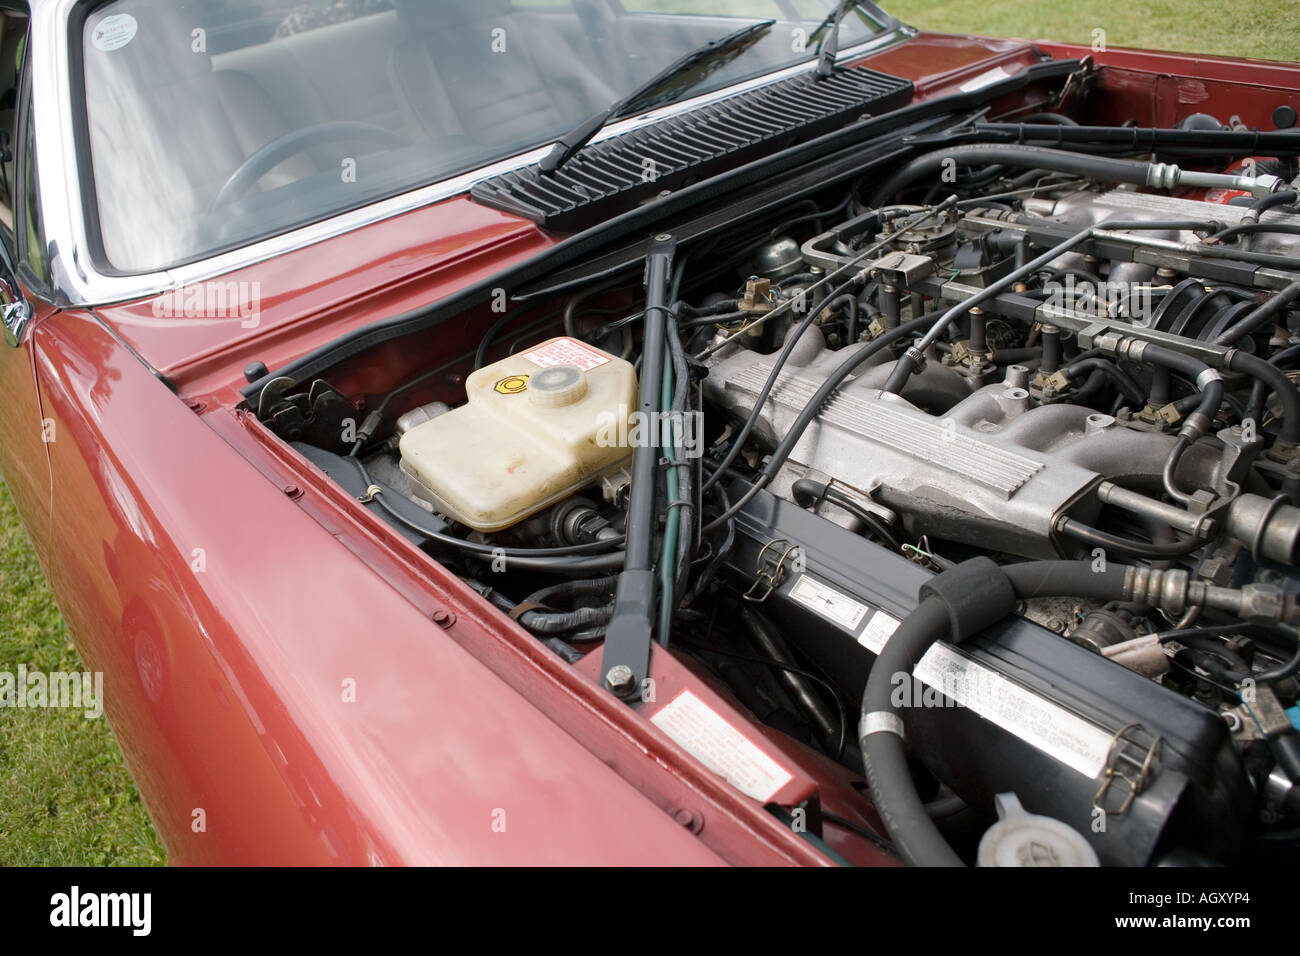 Jaguar XJS classic sports car Stock Photo